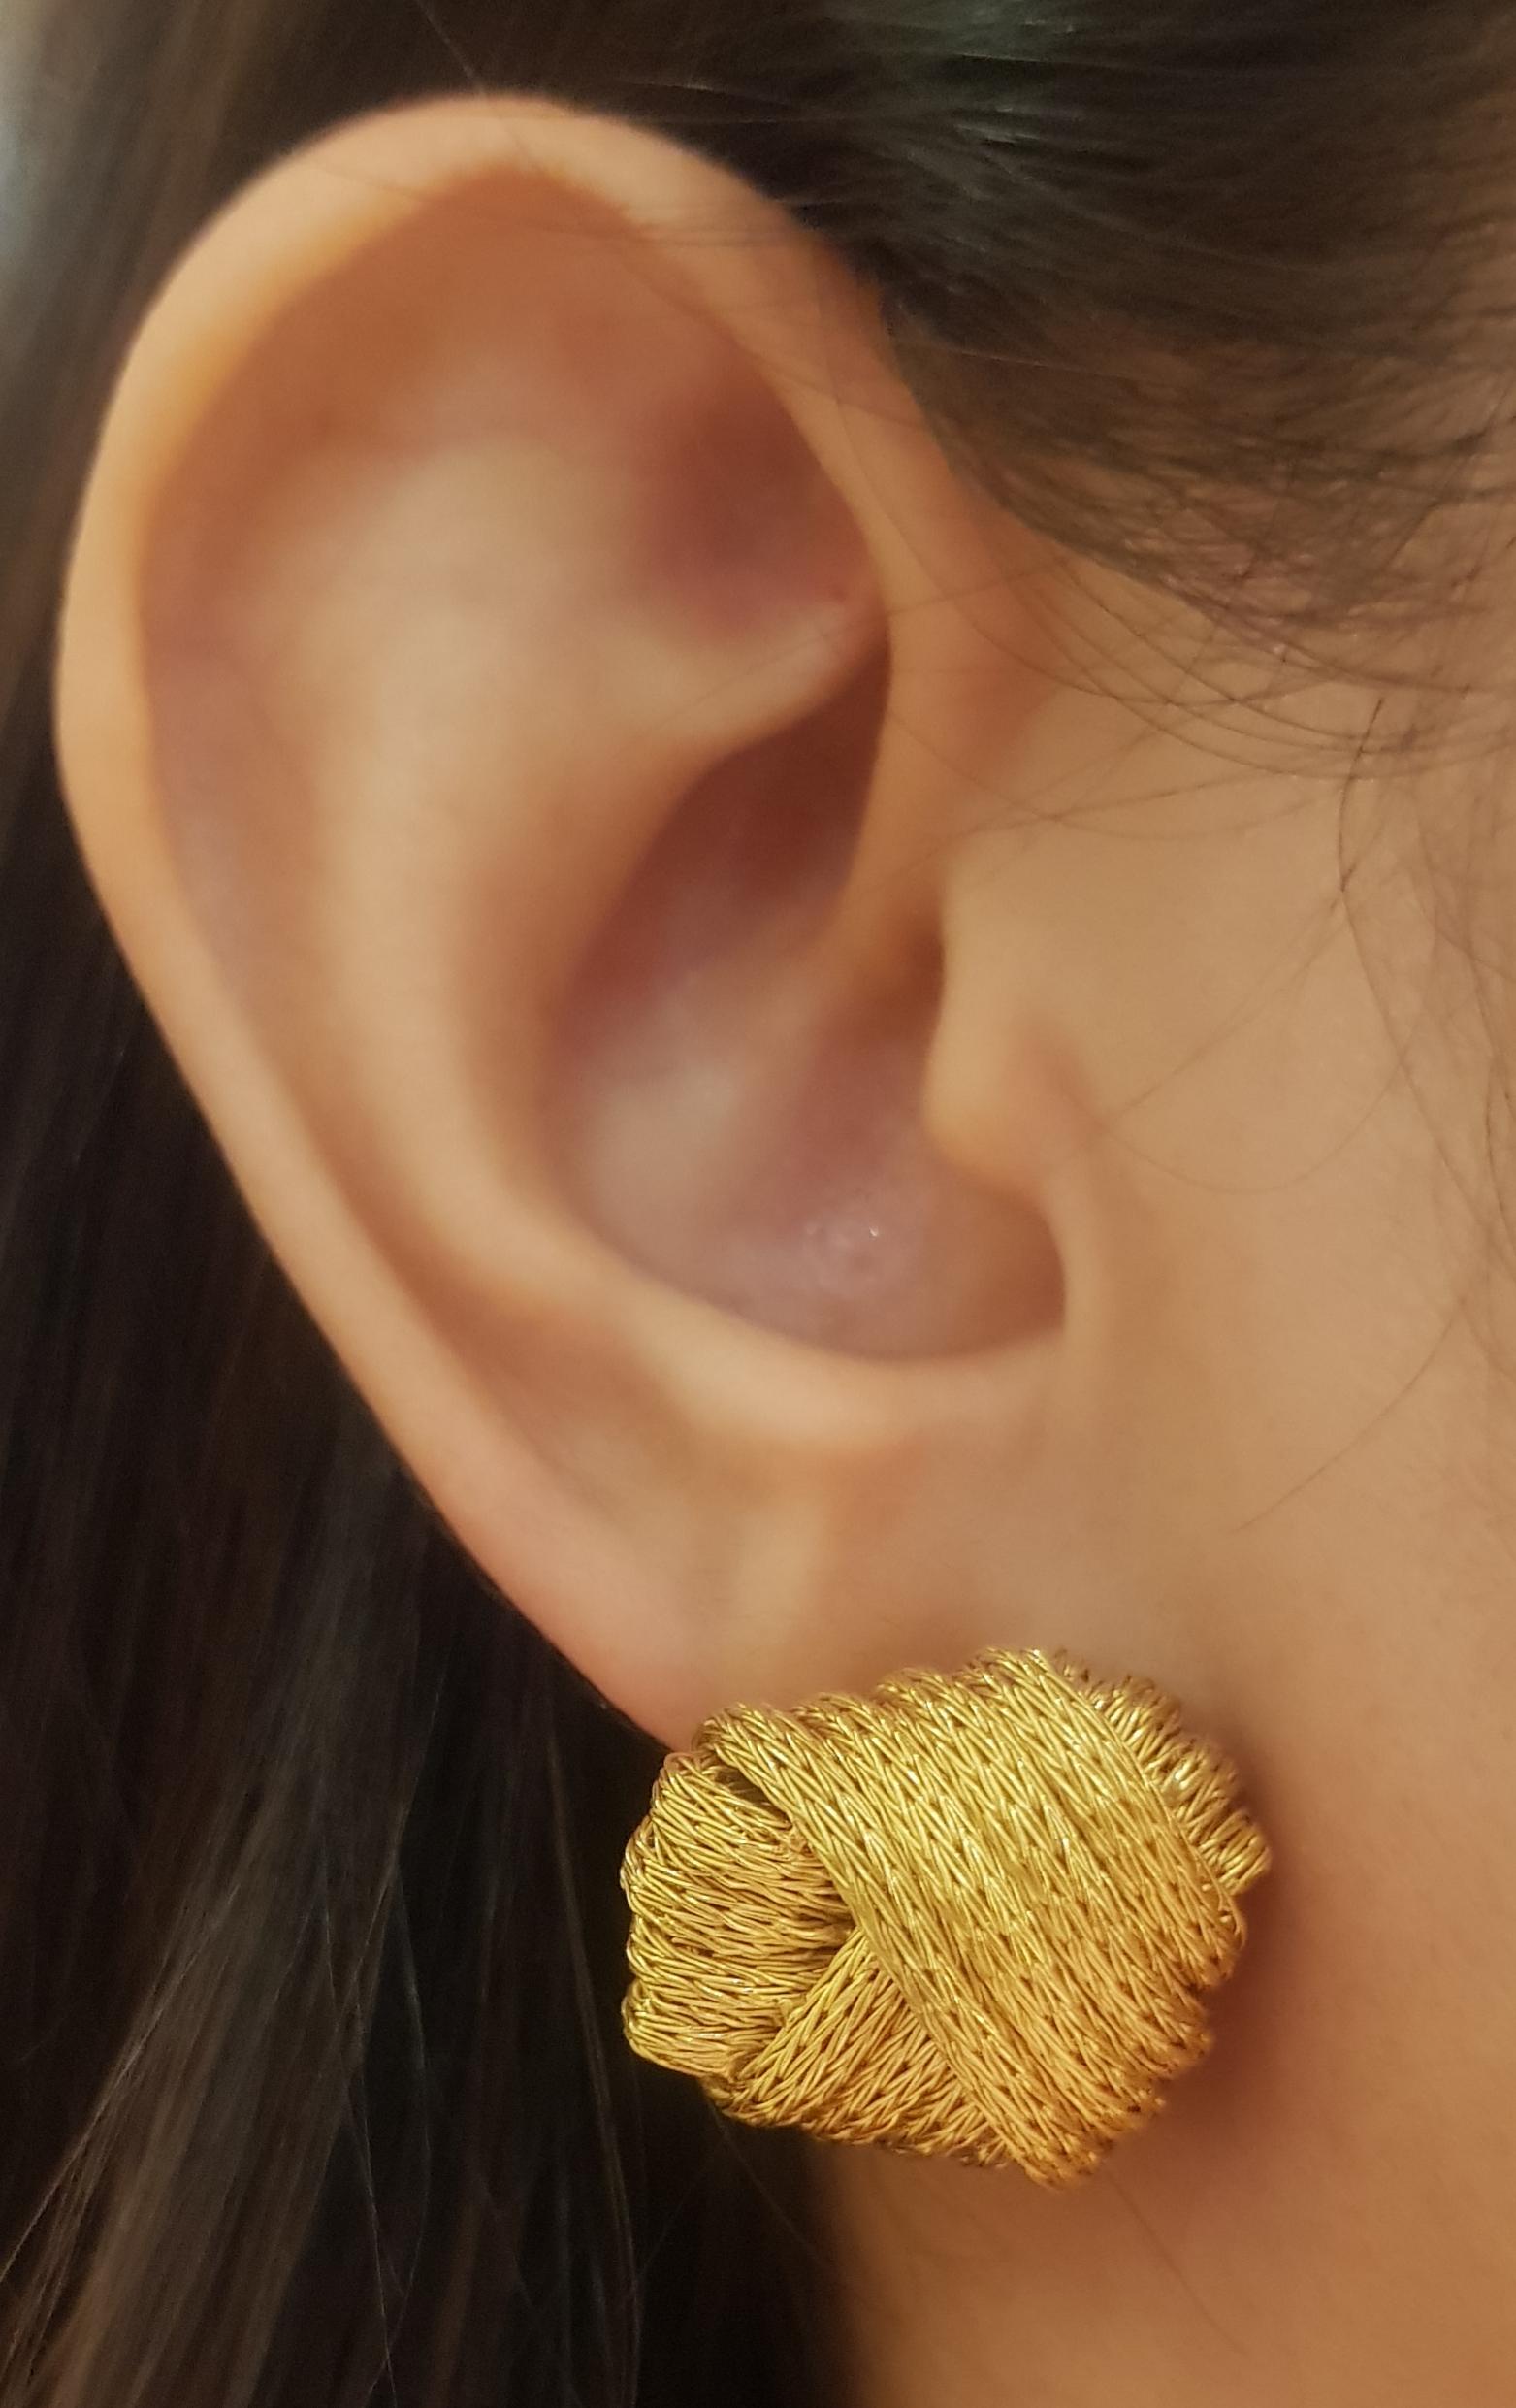 18 Karat Gold Earrings

Width:   2.0 cm 
Length:  1.90 cm
Total Weight: 18.24 grams

